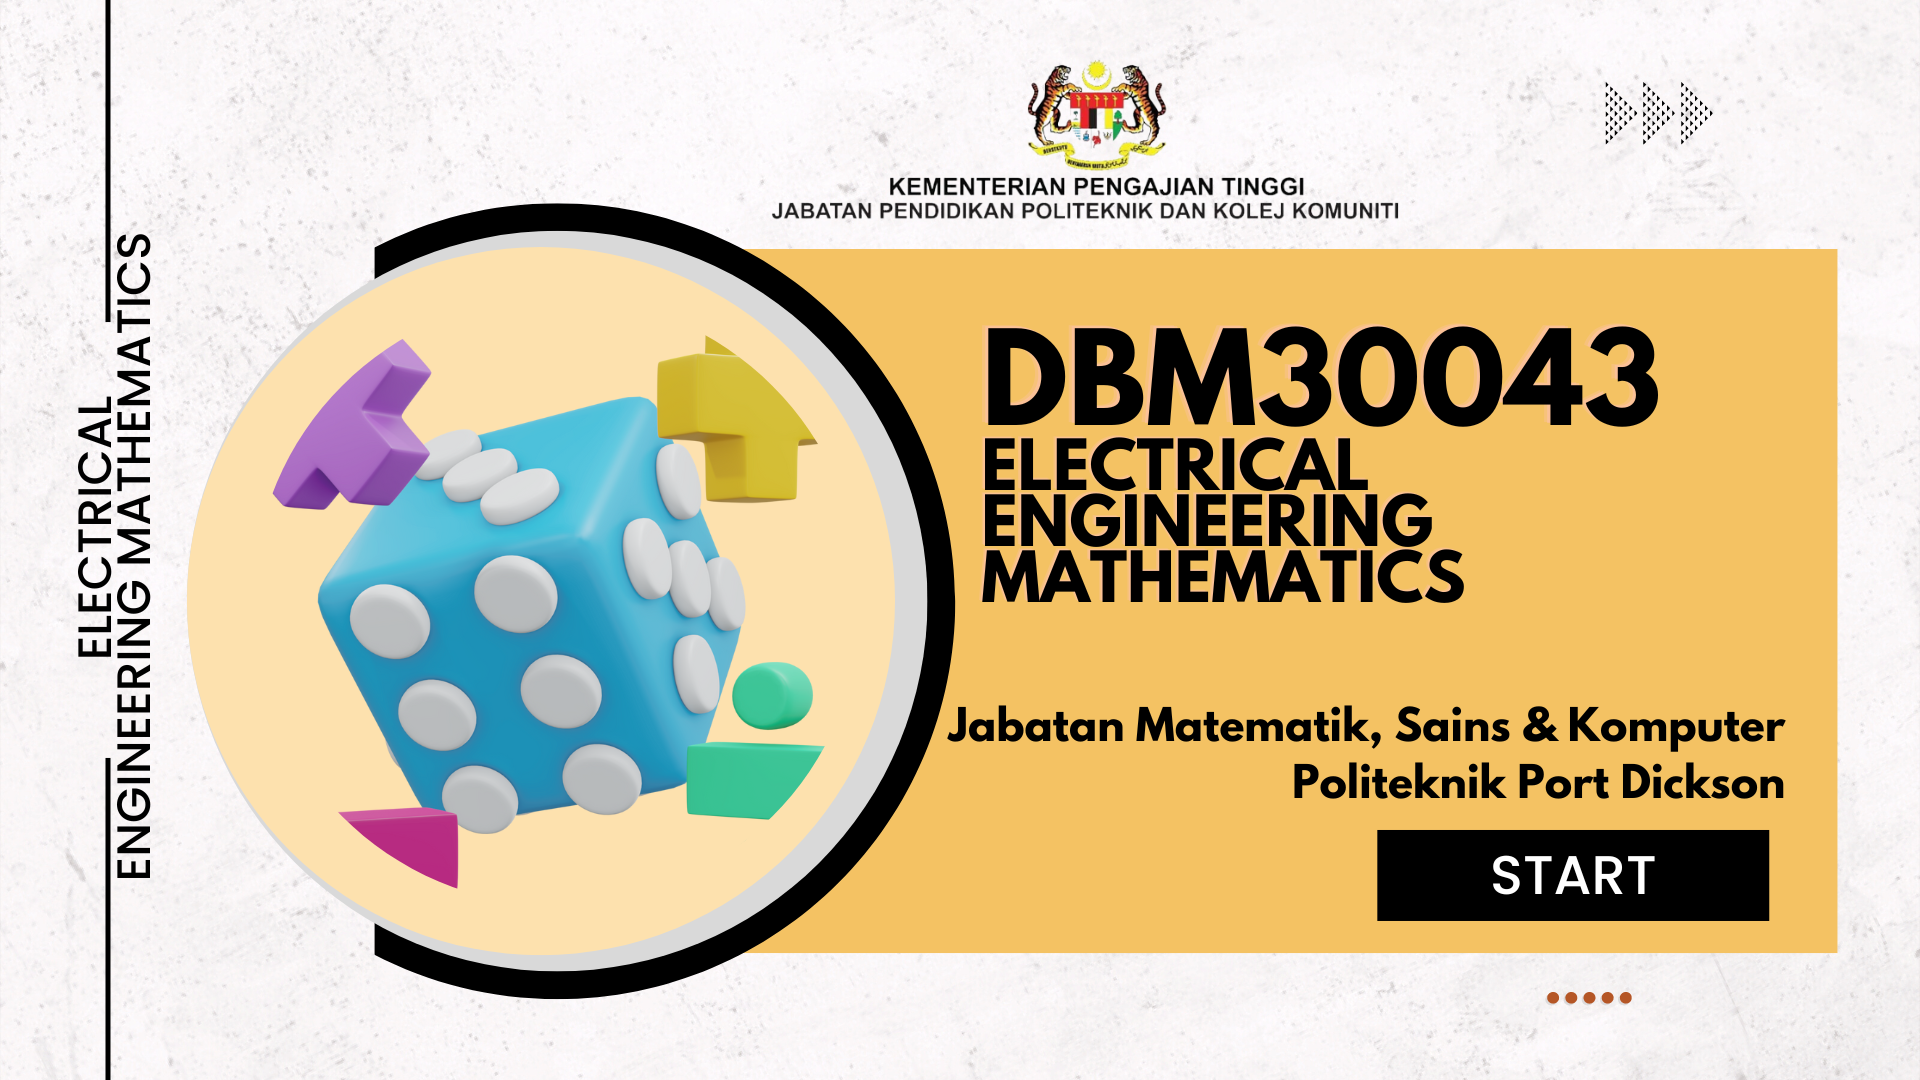 DBM30043 ELECTRICAL ENGINEERING MATHEMATICS 